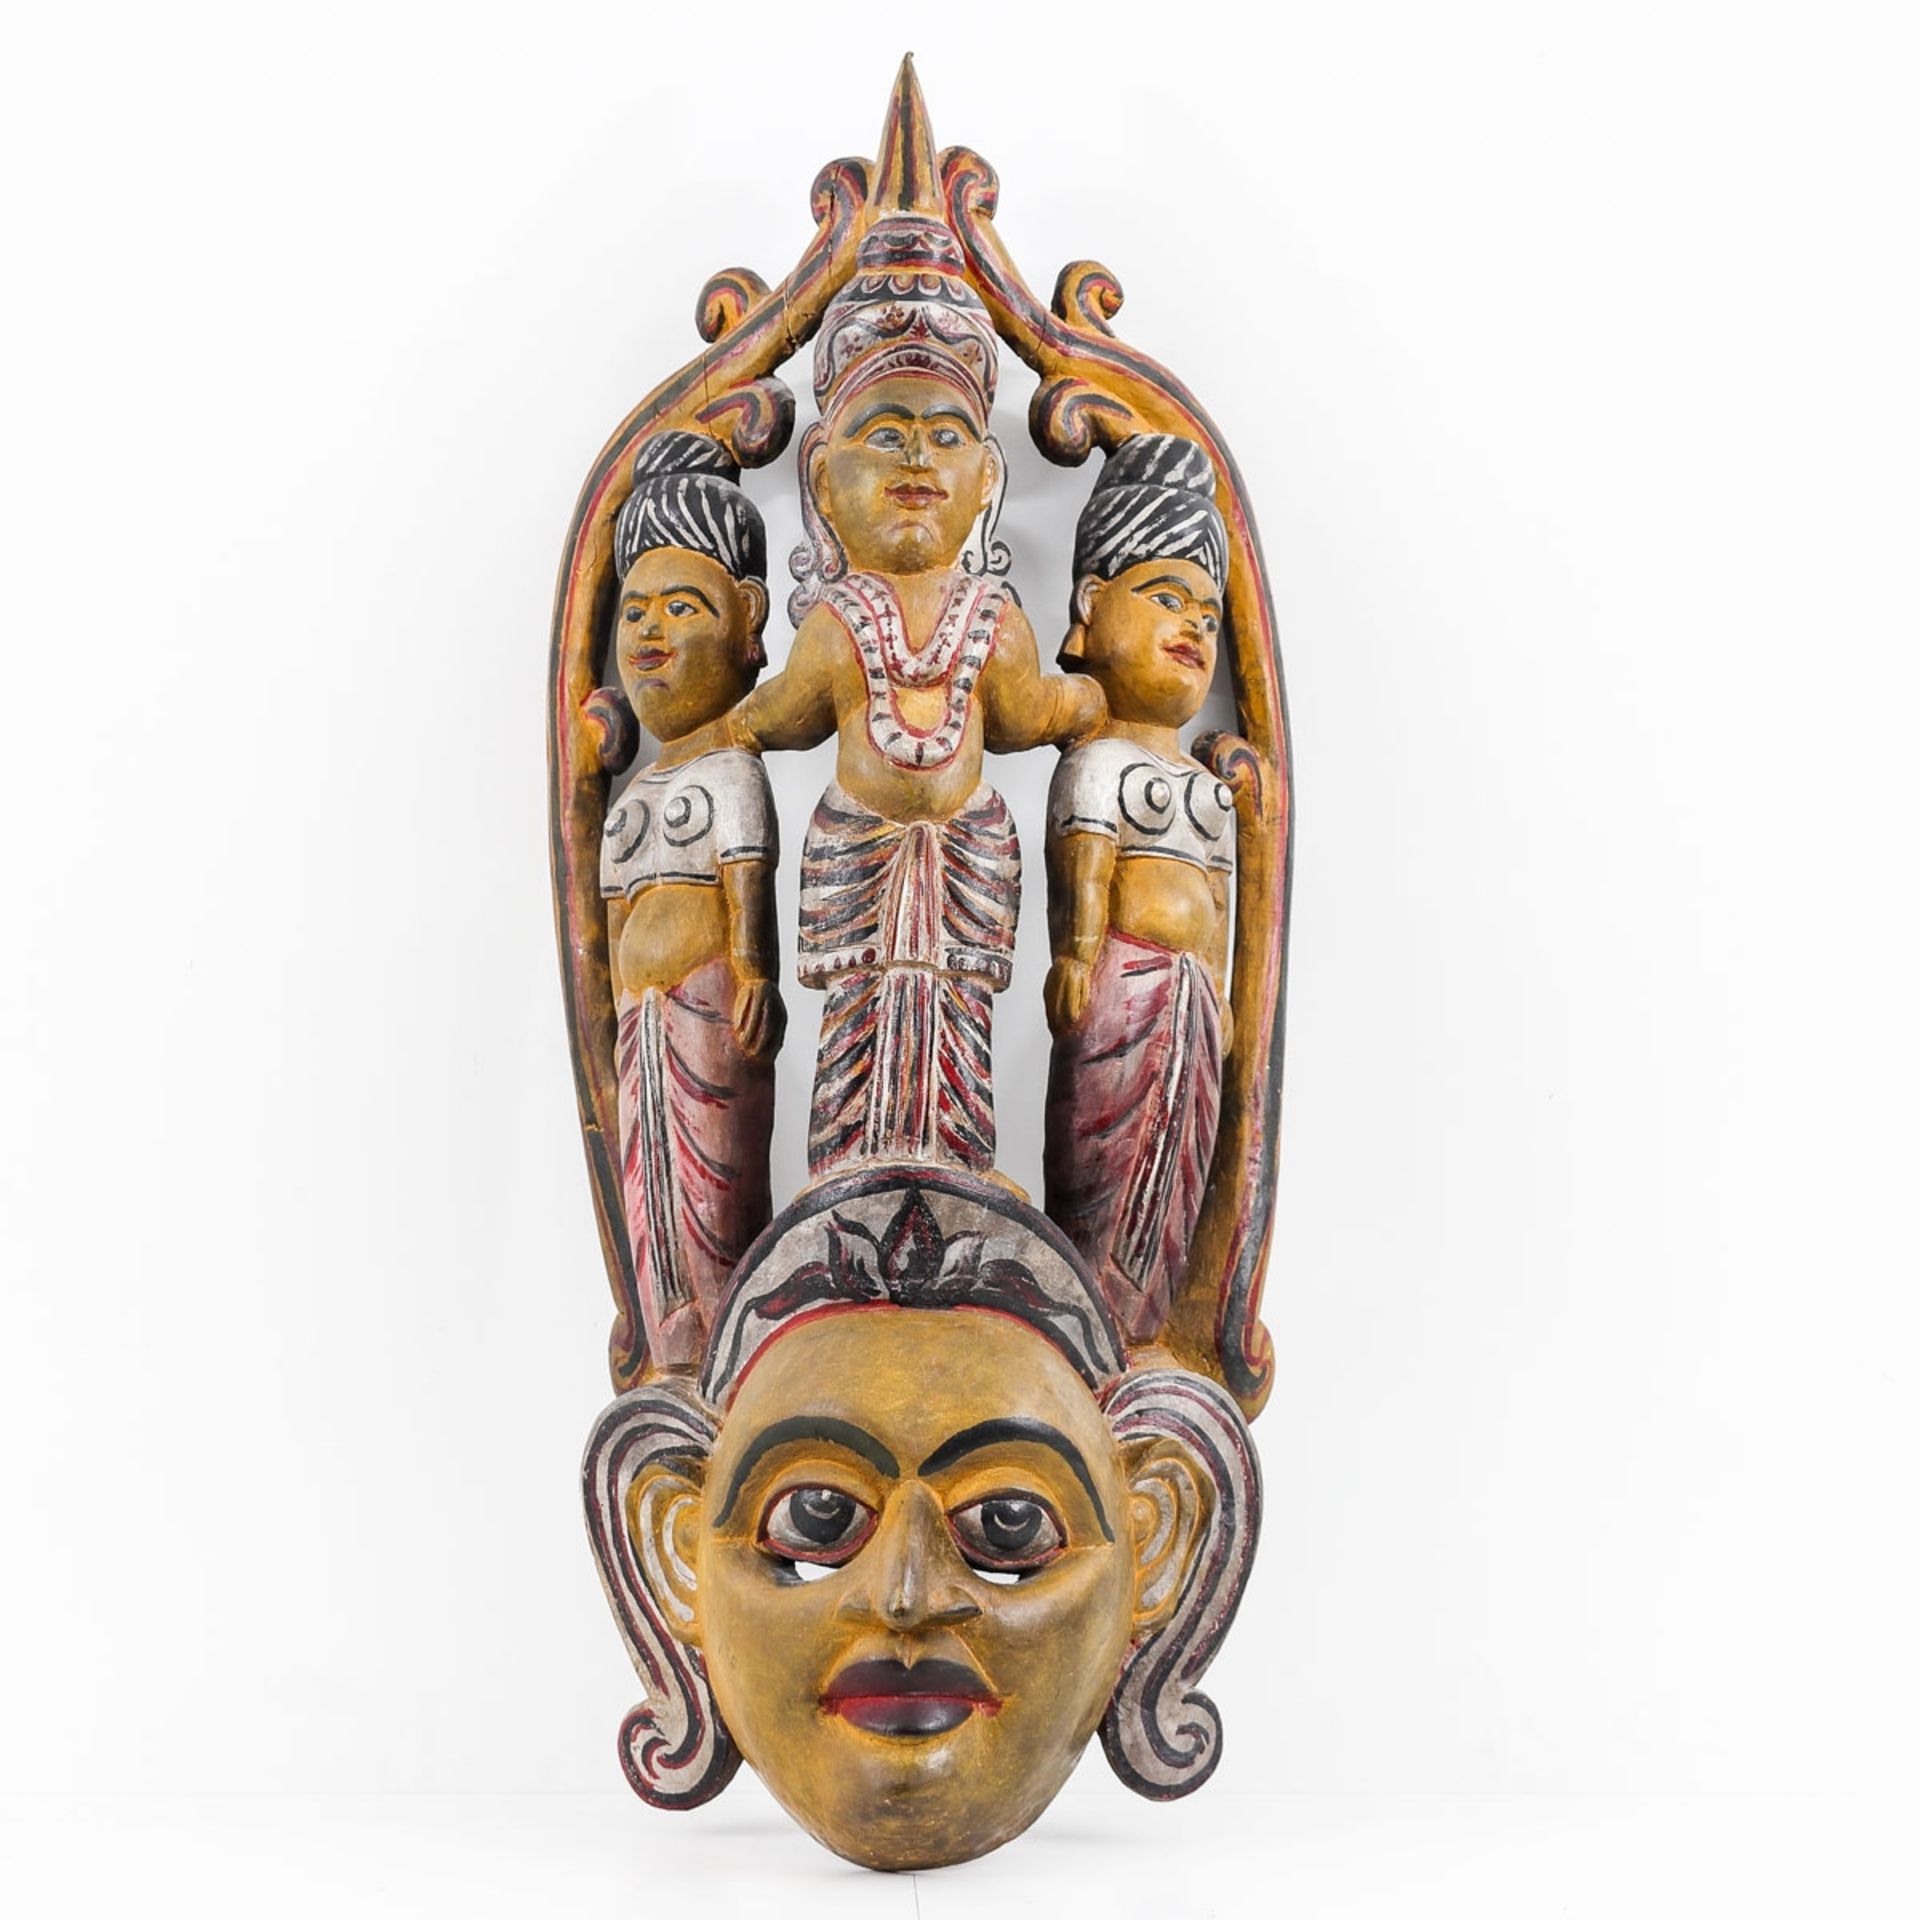 Maske Wohl Sri Lanka, um 1880. Holz, geschnitzt. H. 68 cm. B. 28,5 cm. Polychrom bemalt. Abnu